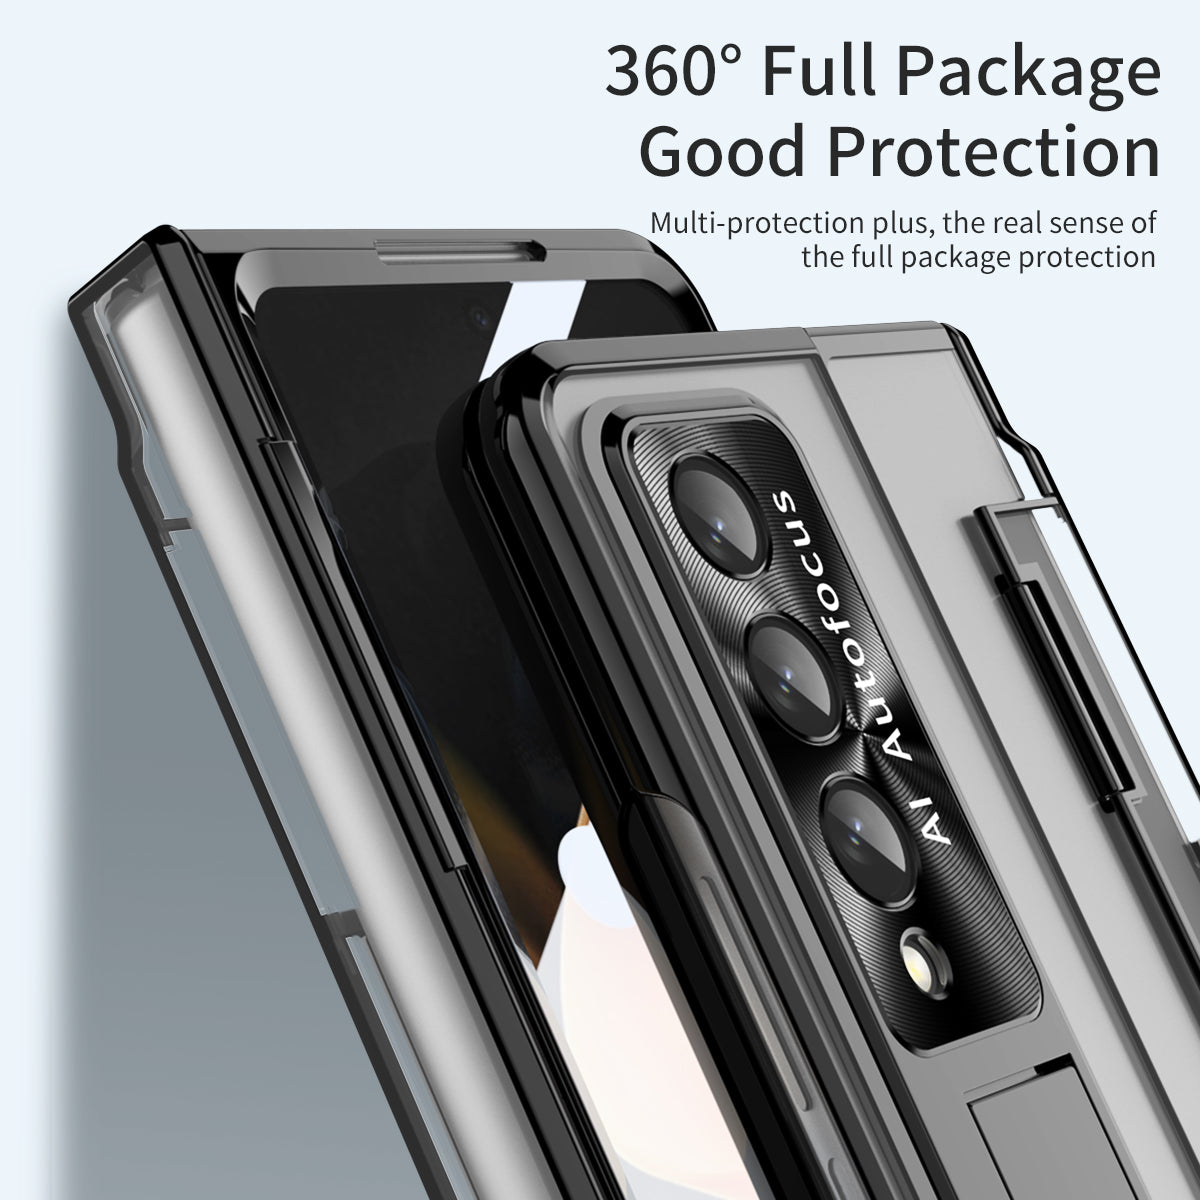 Enhanced Version of Armor Hinge Folding Shell Case For Samsung Galaxy Z Fold3